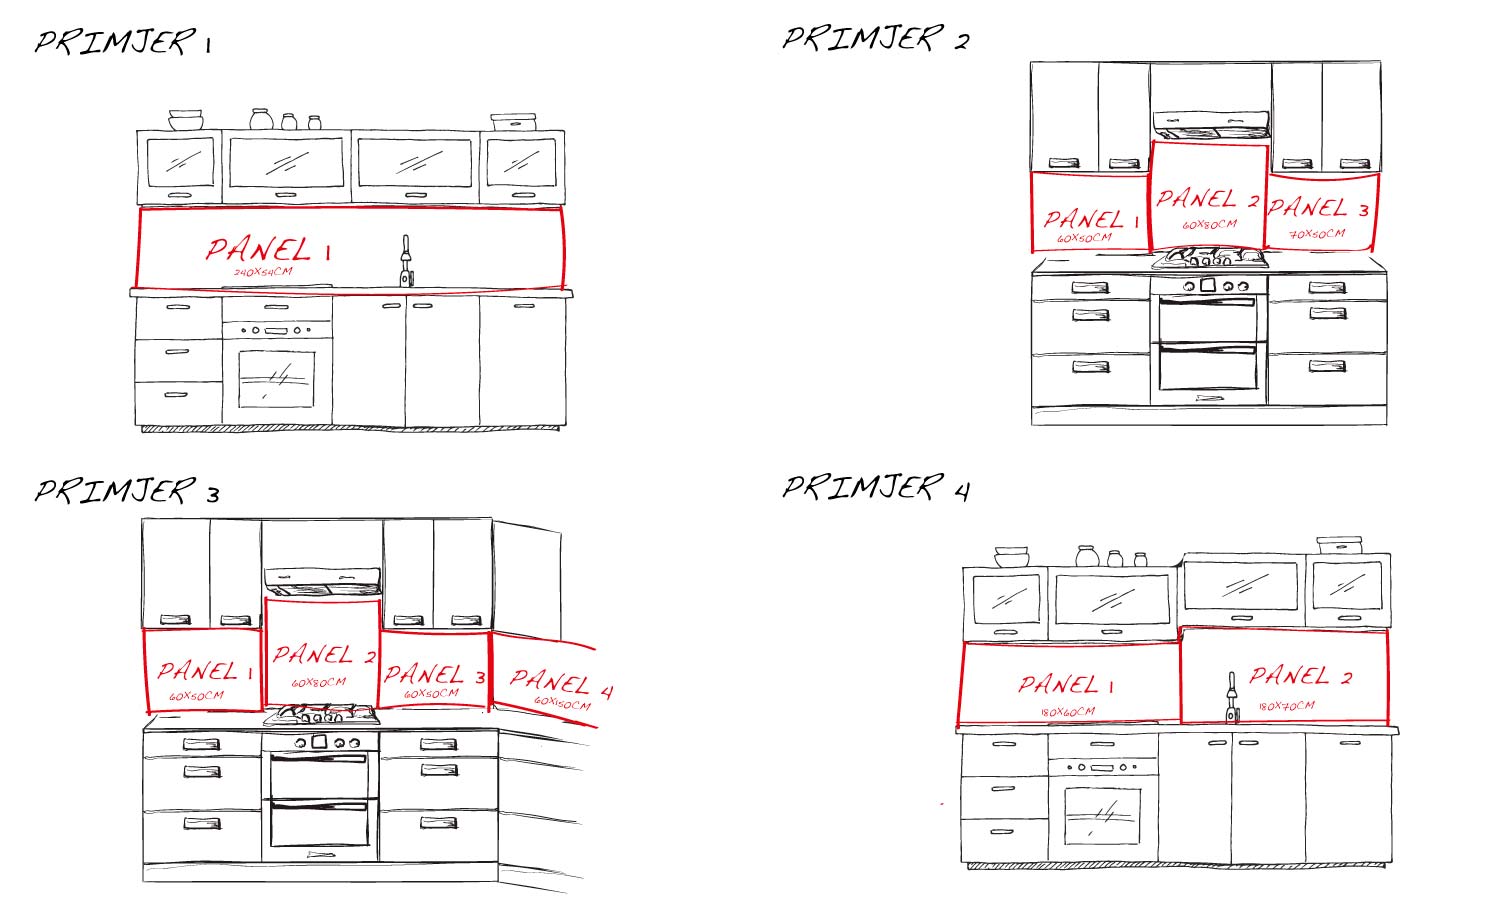 Paneli za kuhinje Frozen tree  -  Stakleni / PVC ploče / Pleksiglas -  sa printom za kuhinju, Zidne obloge PKU334